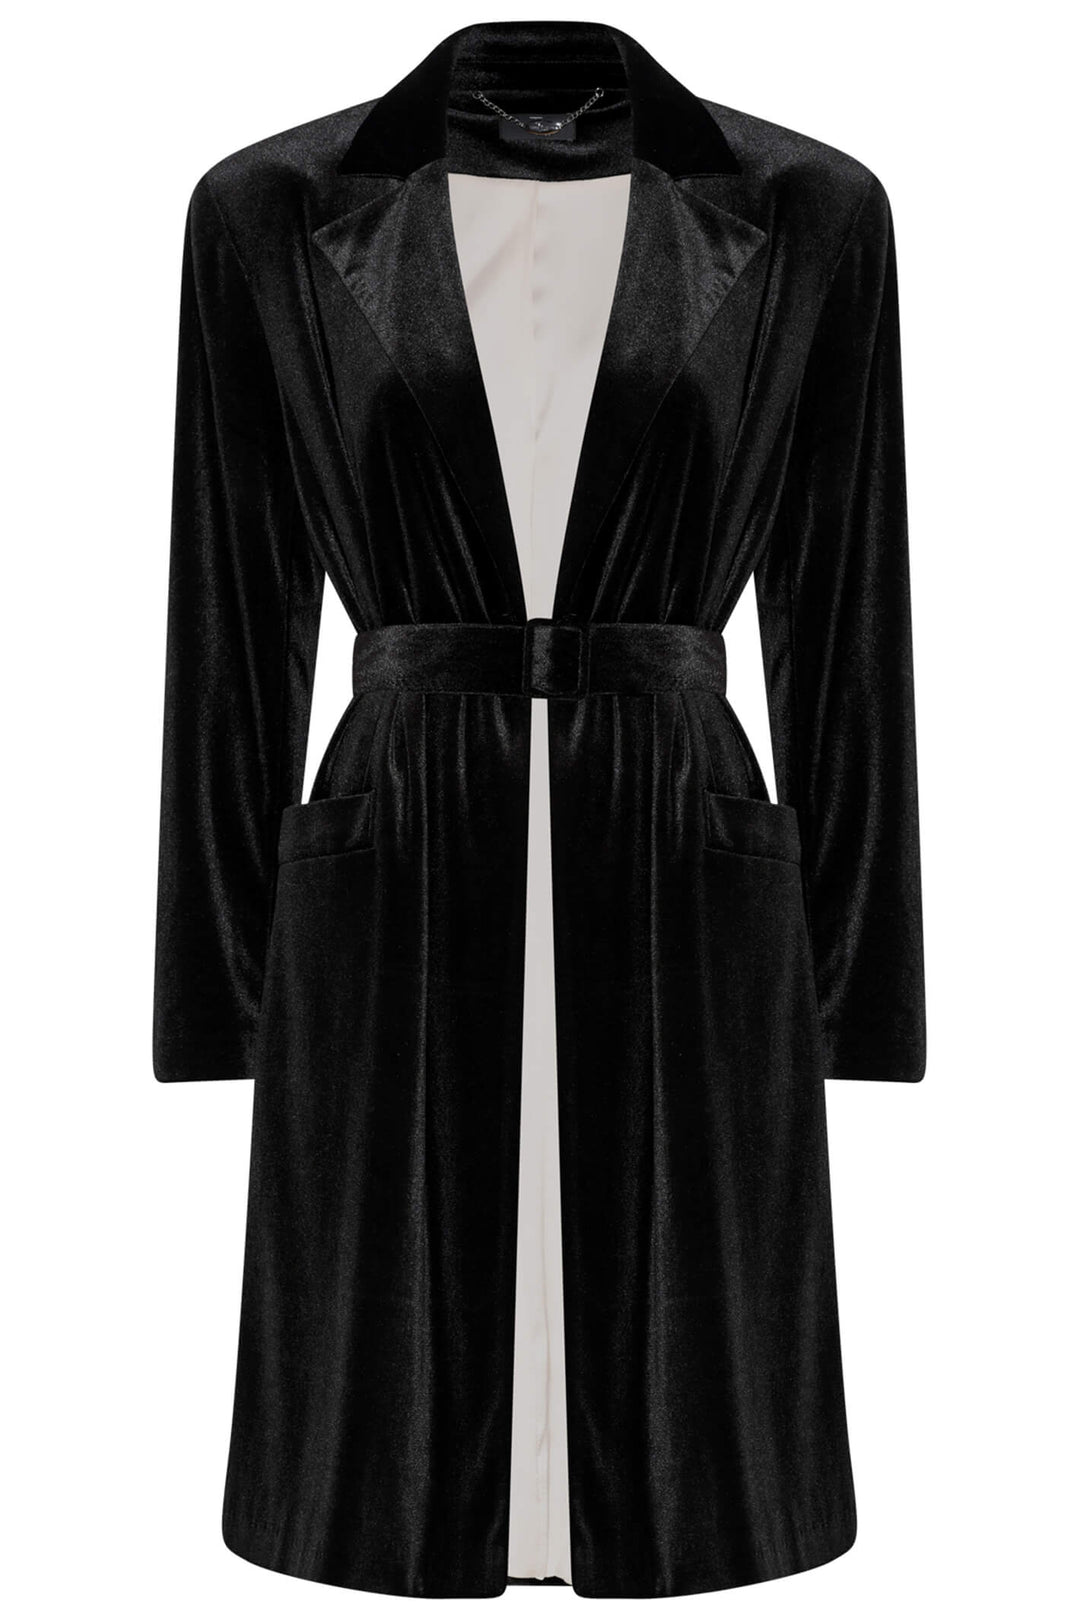 Tia 77614 90 Black Velvet Longline Jacket With Belt - Experience Boutique